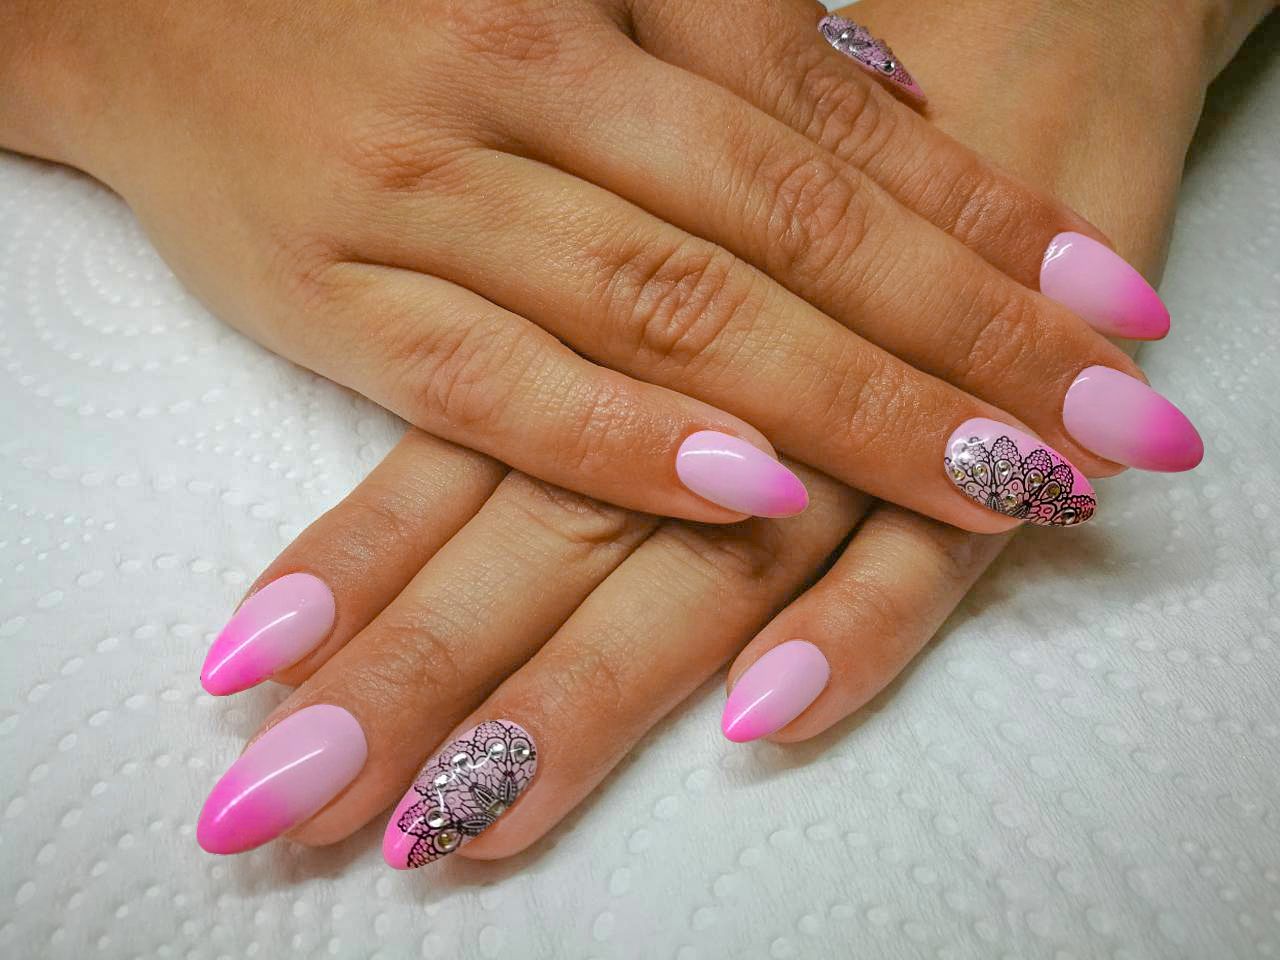 Jemna Krajka A Fantasticke Ombre Vytvorene Gel Laky Neonail Thermo Color Takove Proste Chcete Pink Ombre Lace Manicure Nails Nailar Color Nails Gel